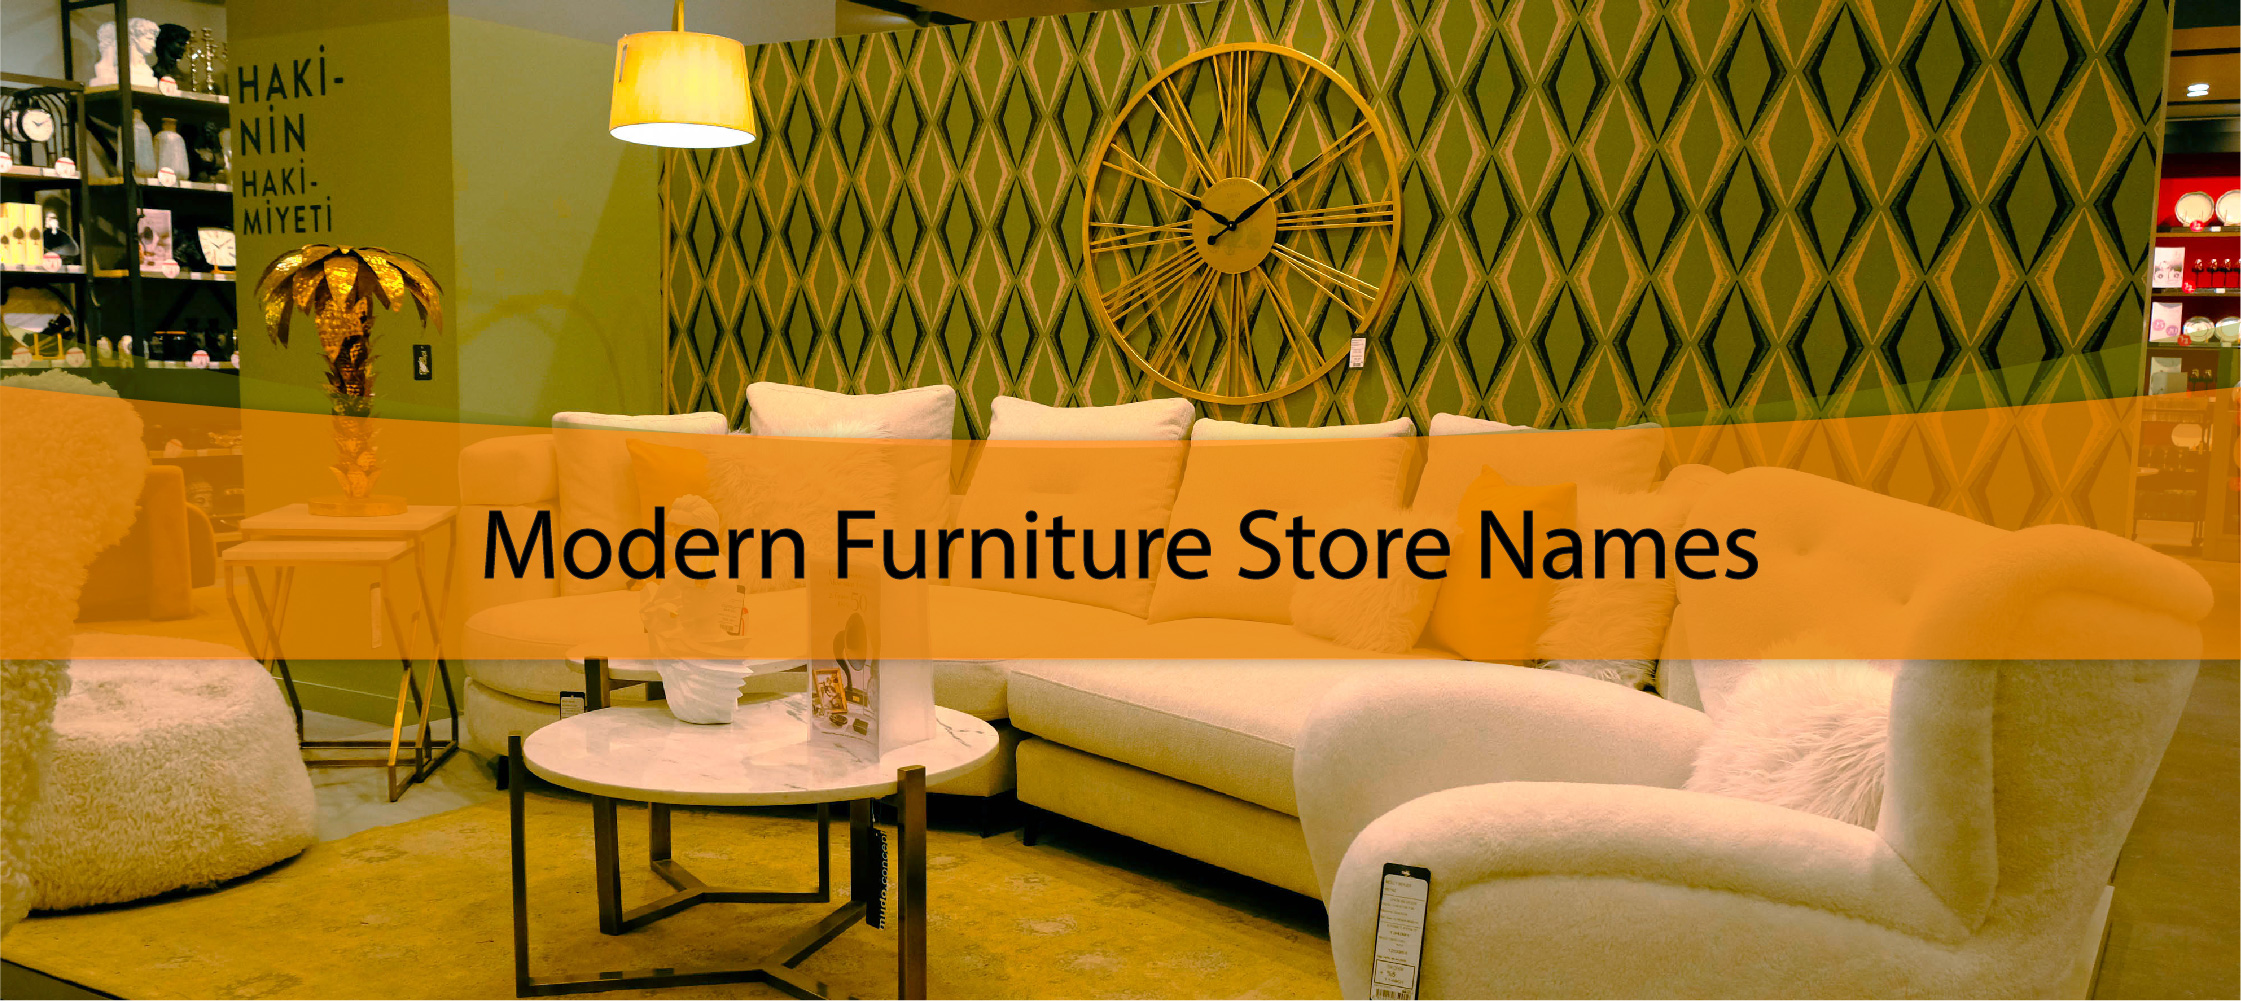 Modern Furniture Store Names